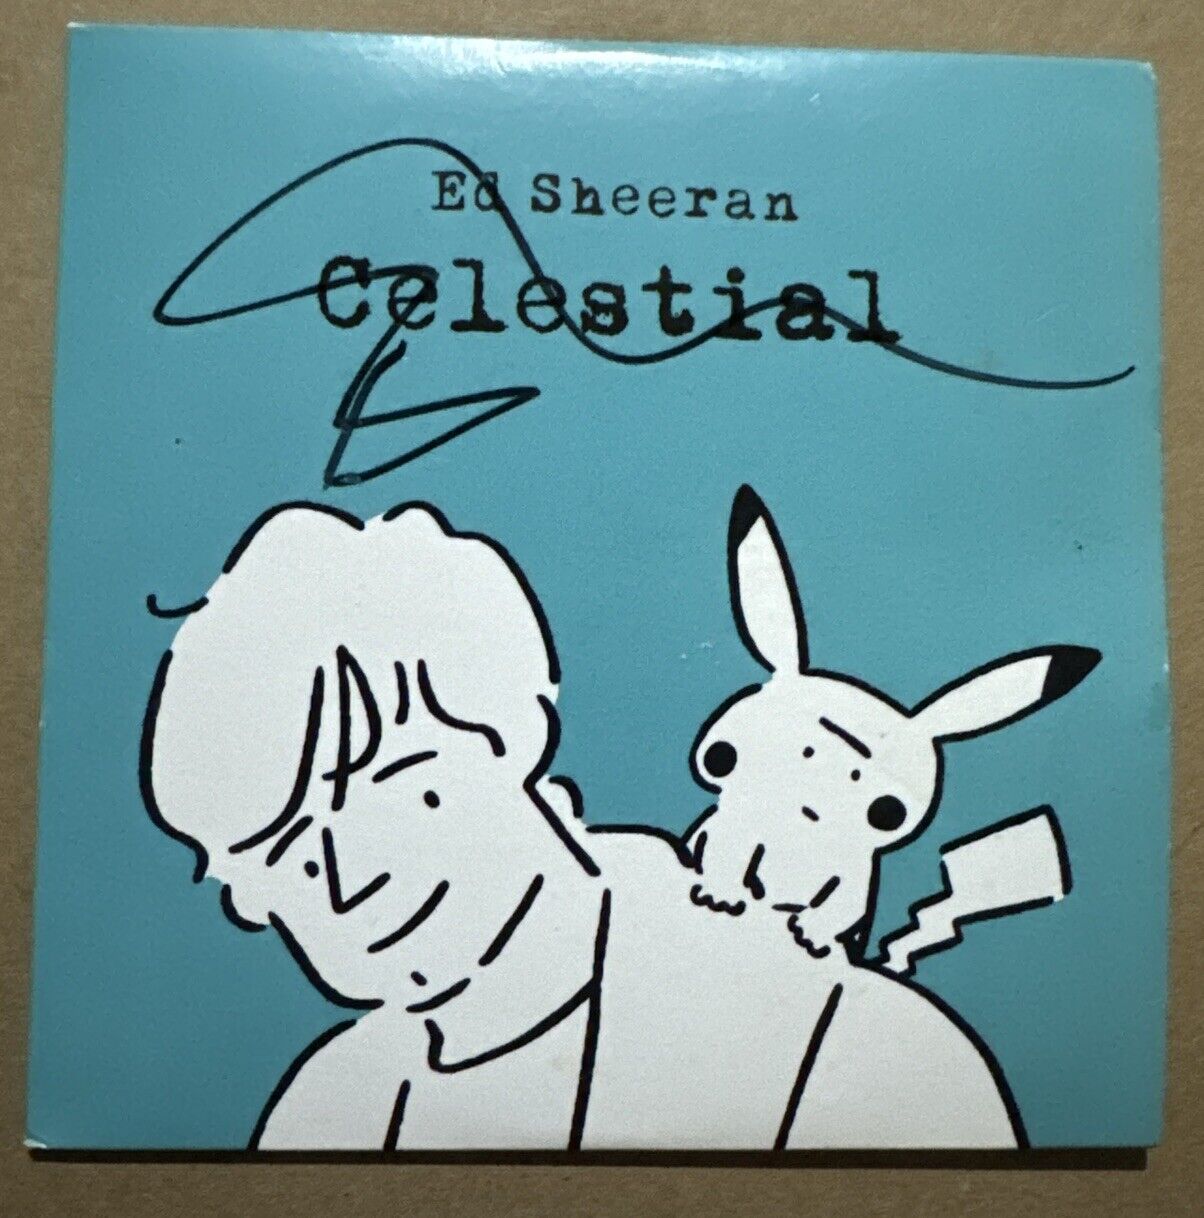 Ed Sheeran Celestial Pokémon Signed CD - Rare & Genuine